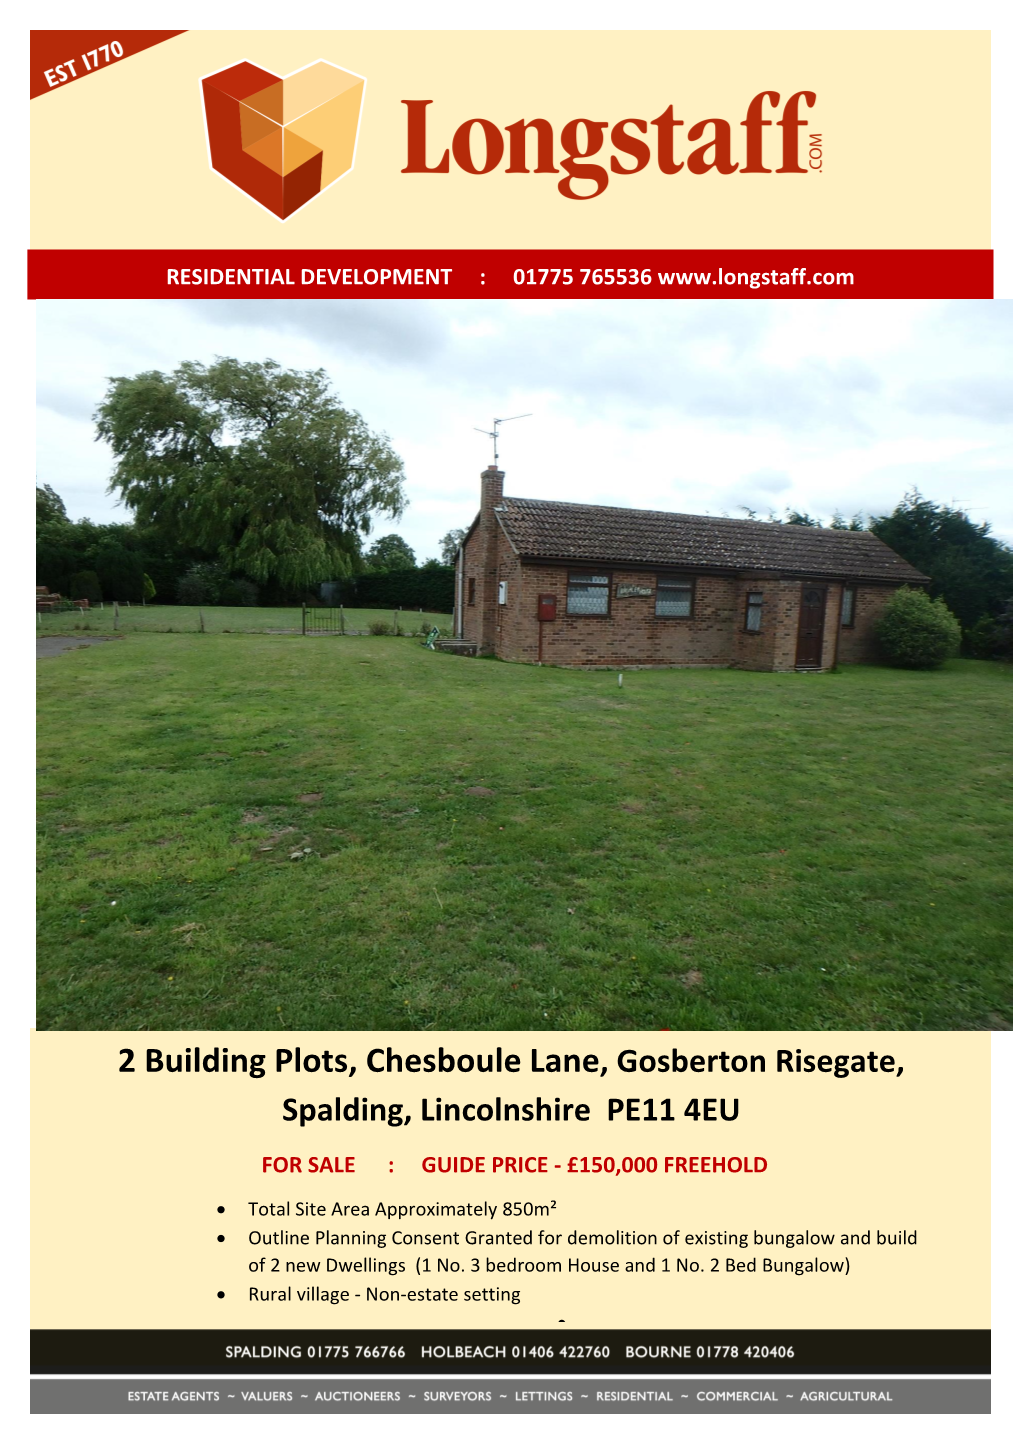 2 Building Plots, Chesboule Lane, Gosberton Risegate, Spalding, Lincolnshire PE11 4EU